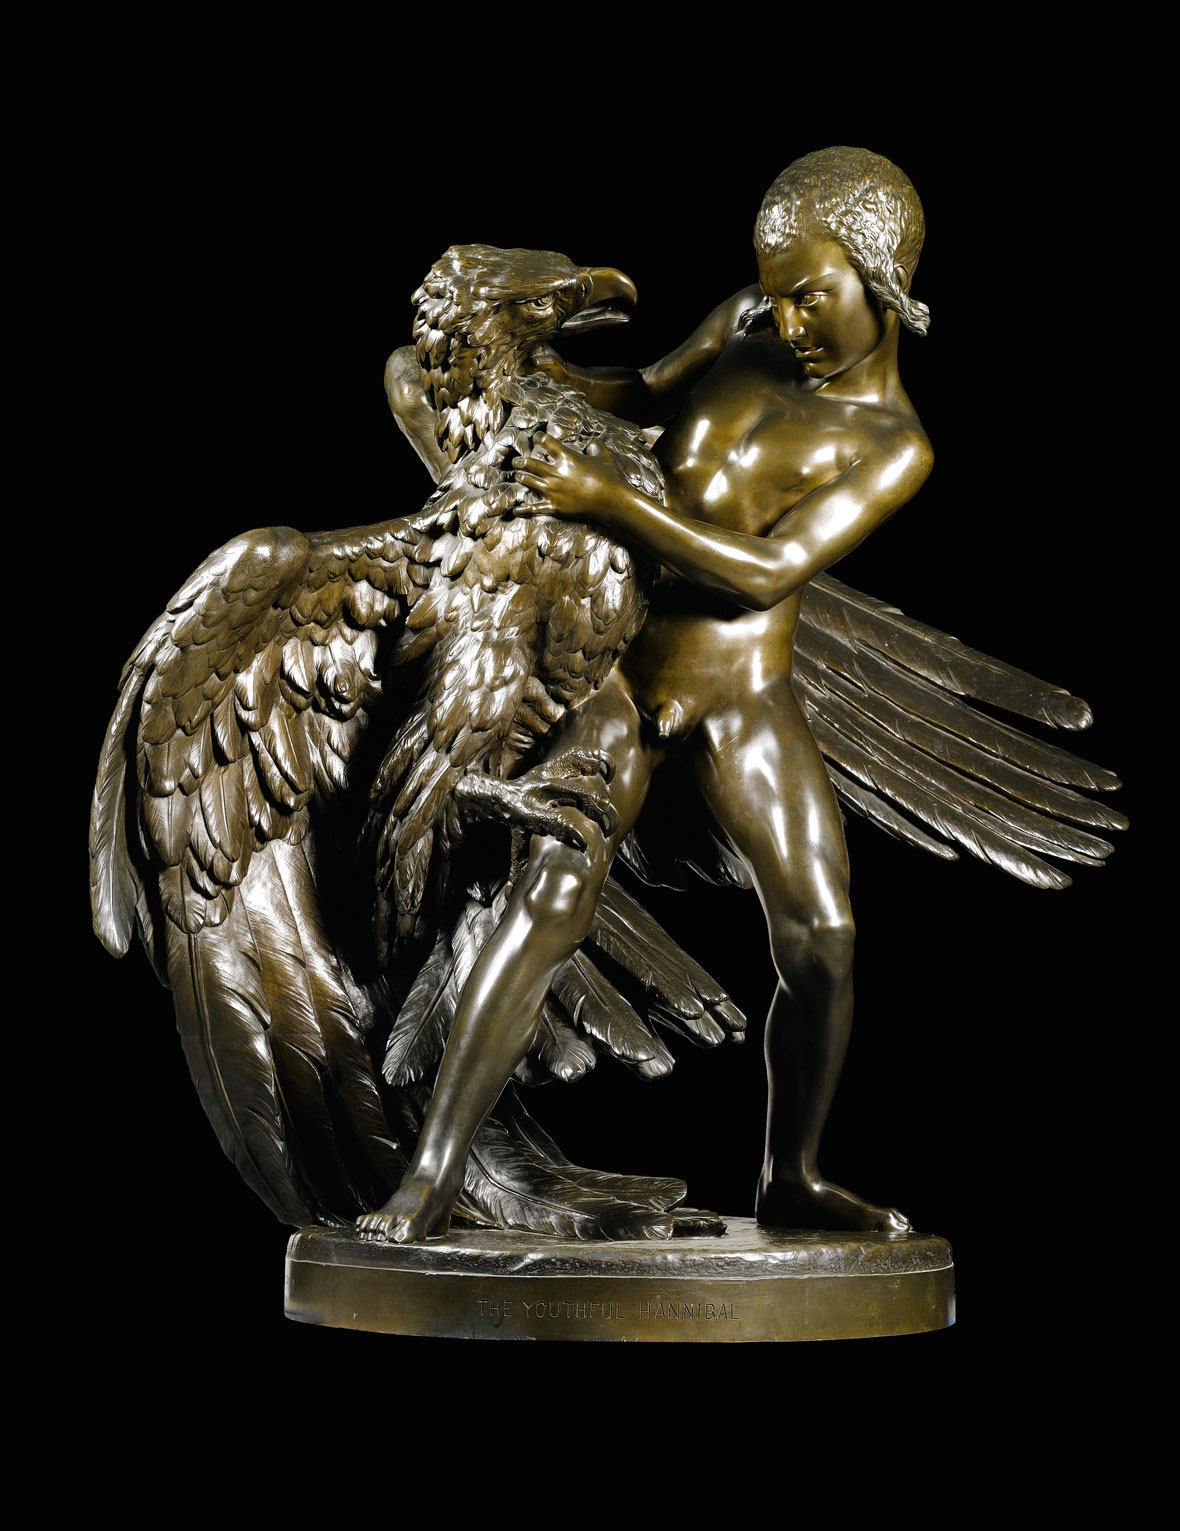 Youthful Hannibal Monumental Bronze